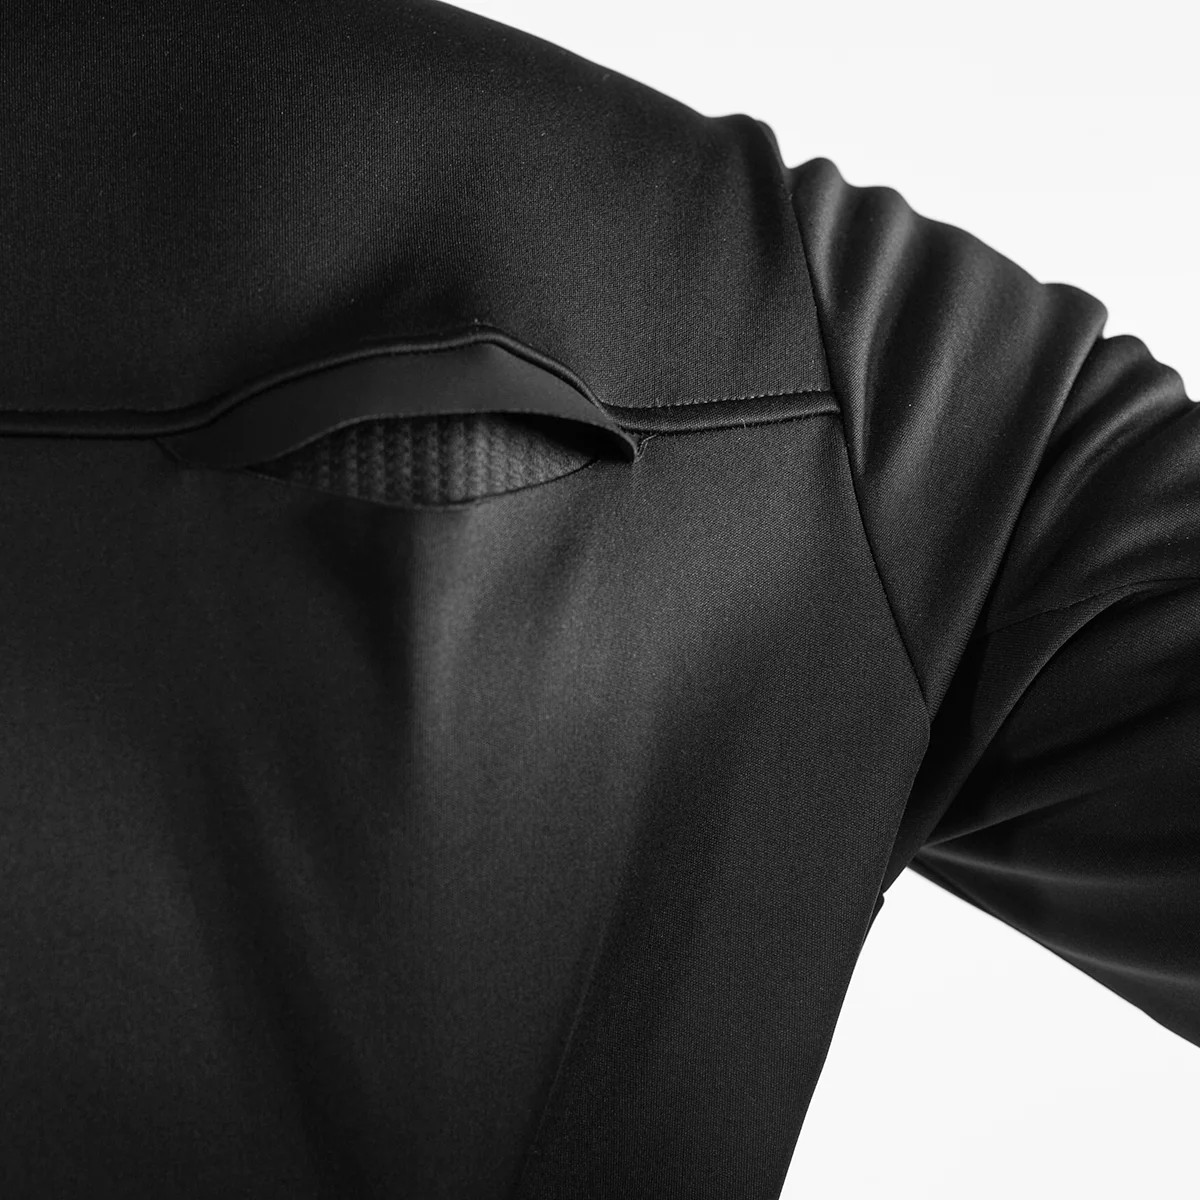 Nalini Ergo Shield Black Thermal Jacket Close Up